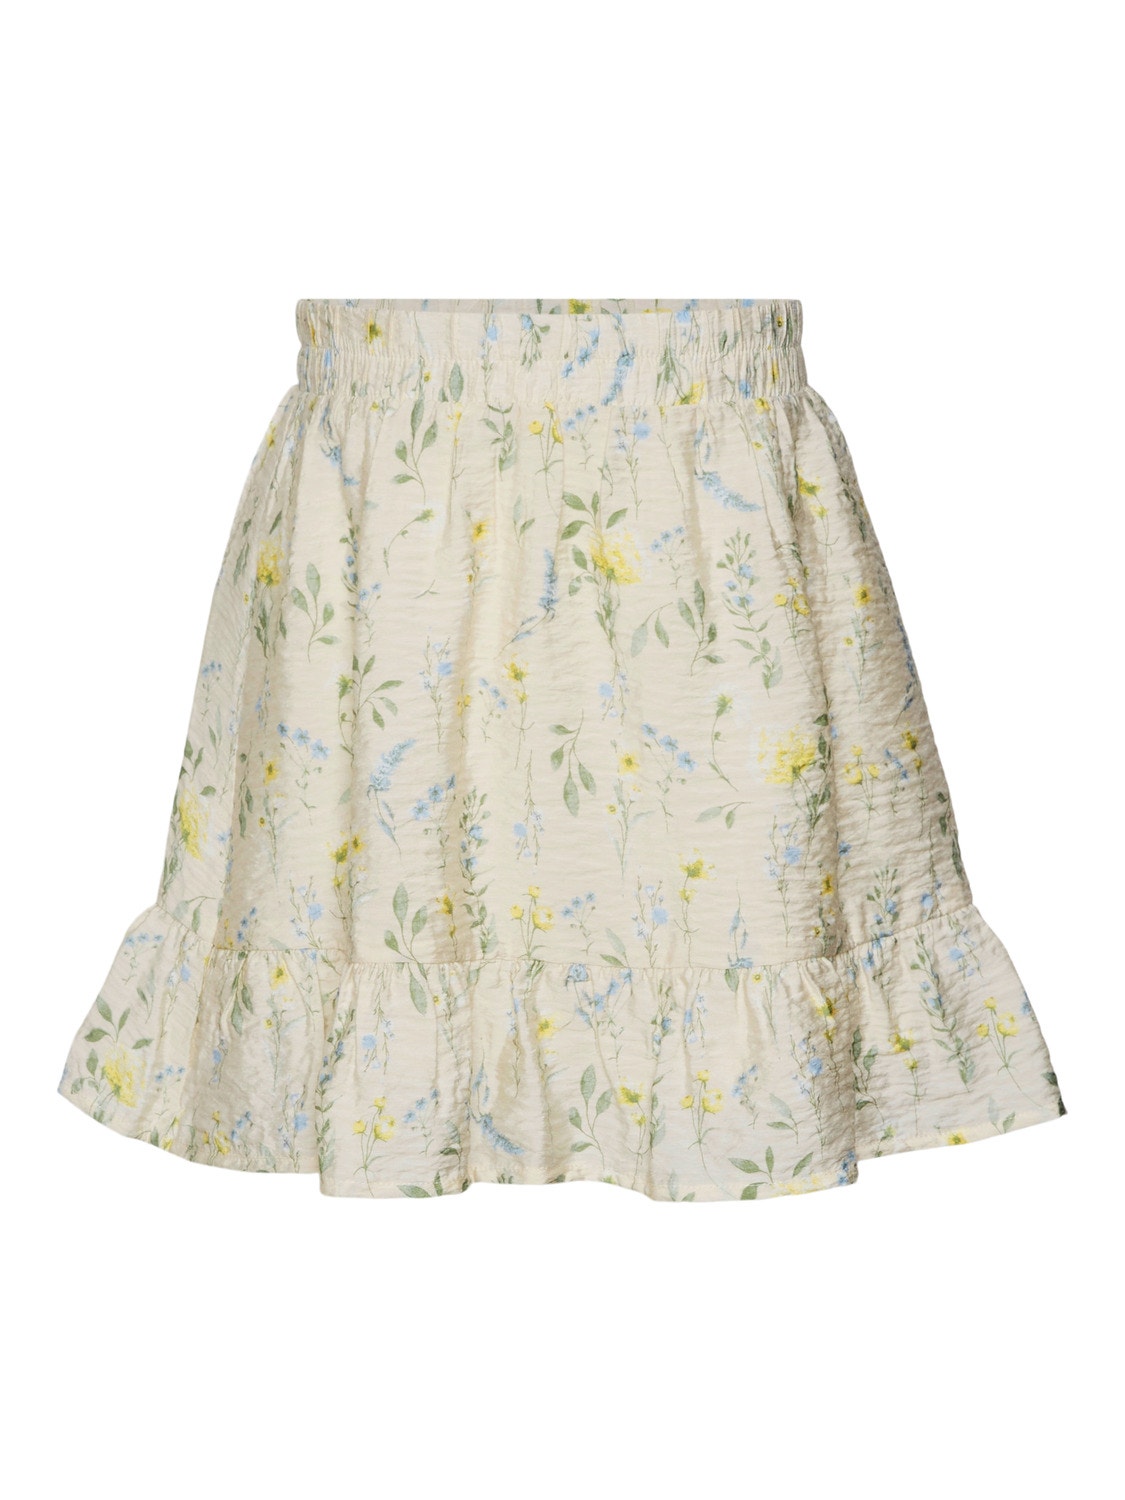 Vero Moda VMJOSIE Short Skirt -Birch - 10304384